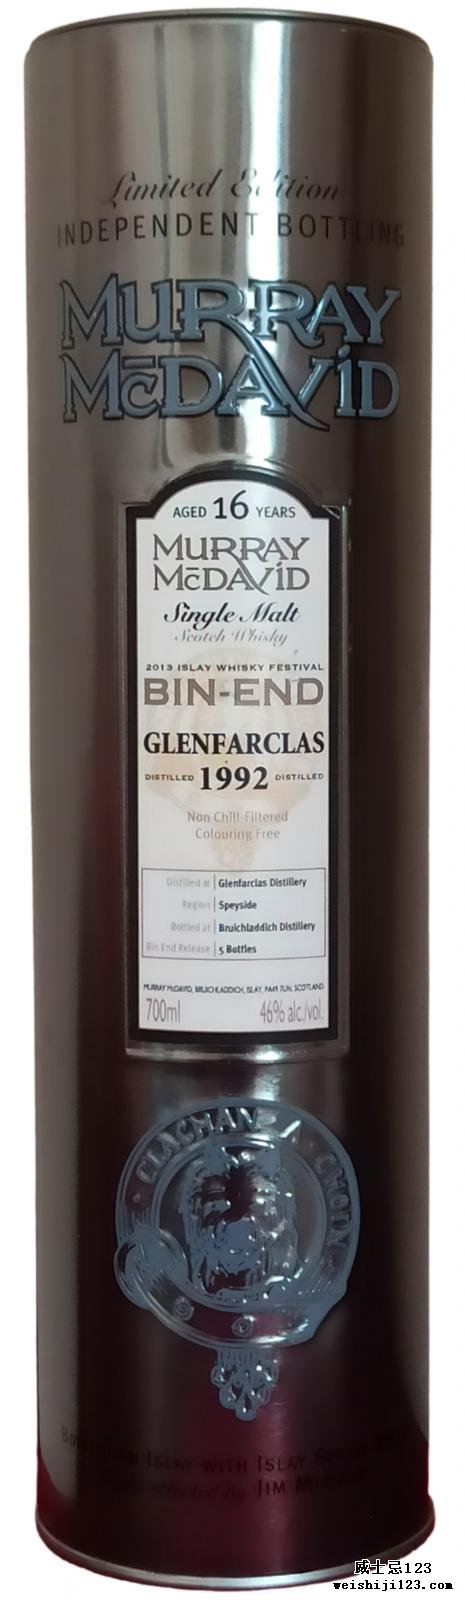 Glenfarclas 1992 MM